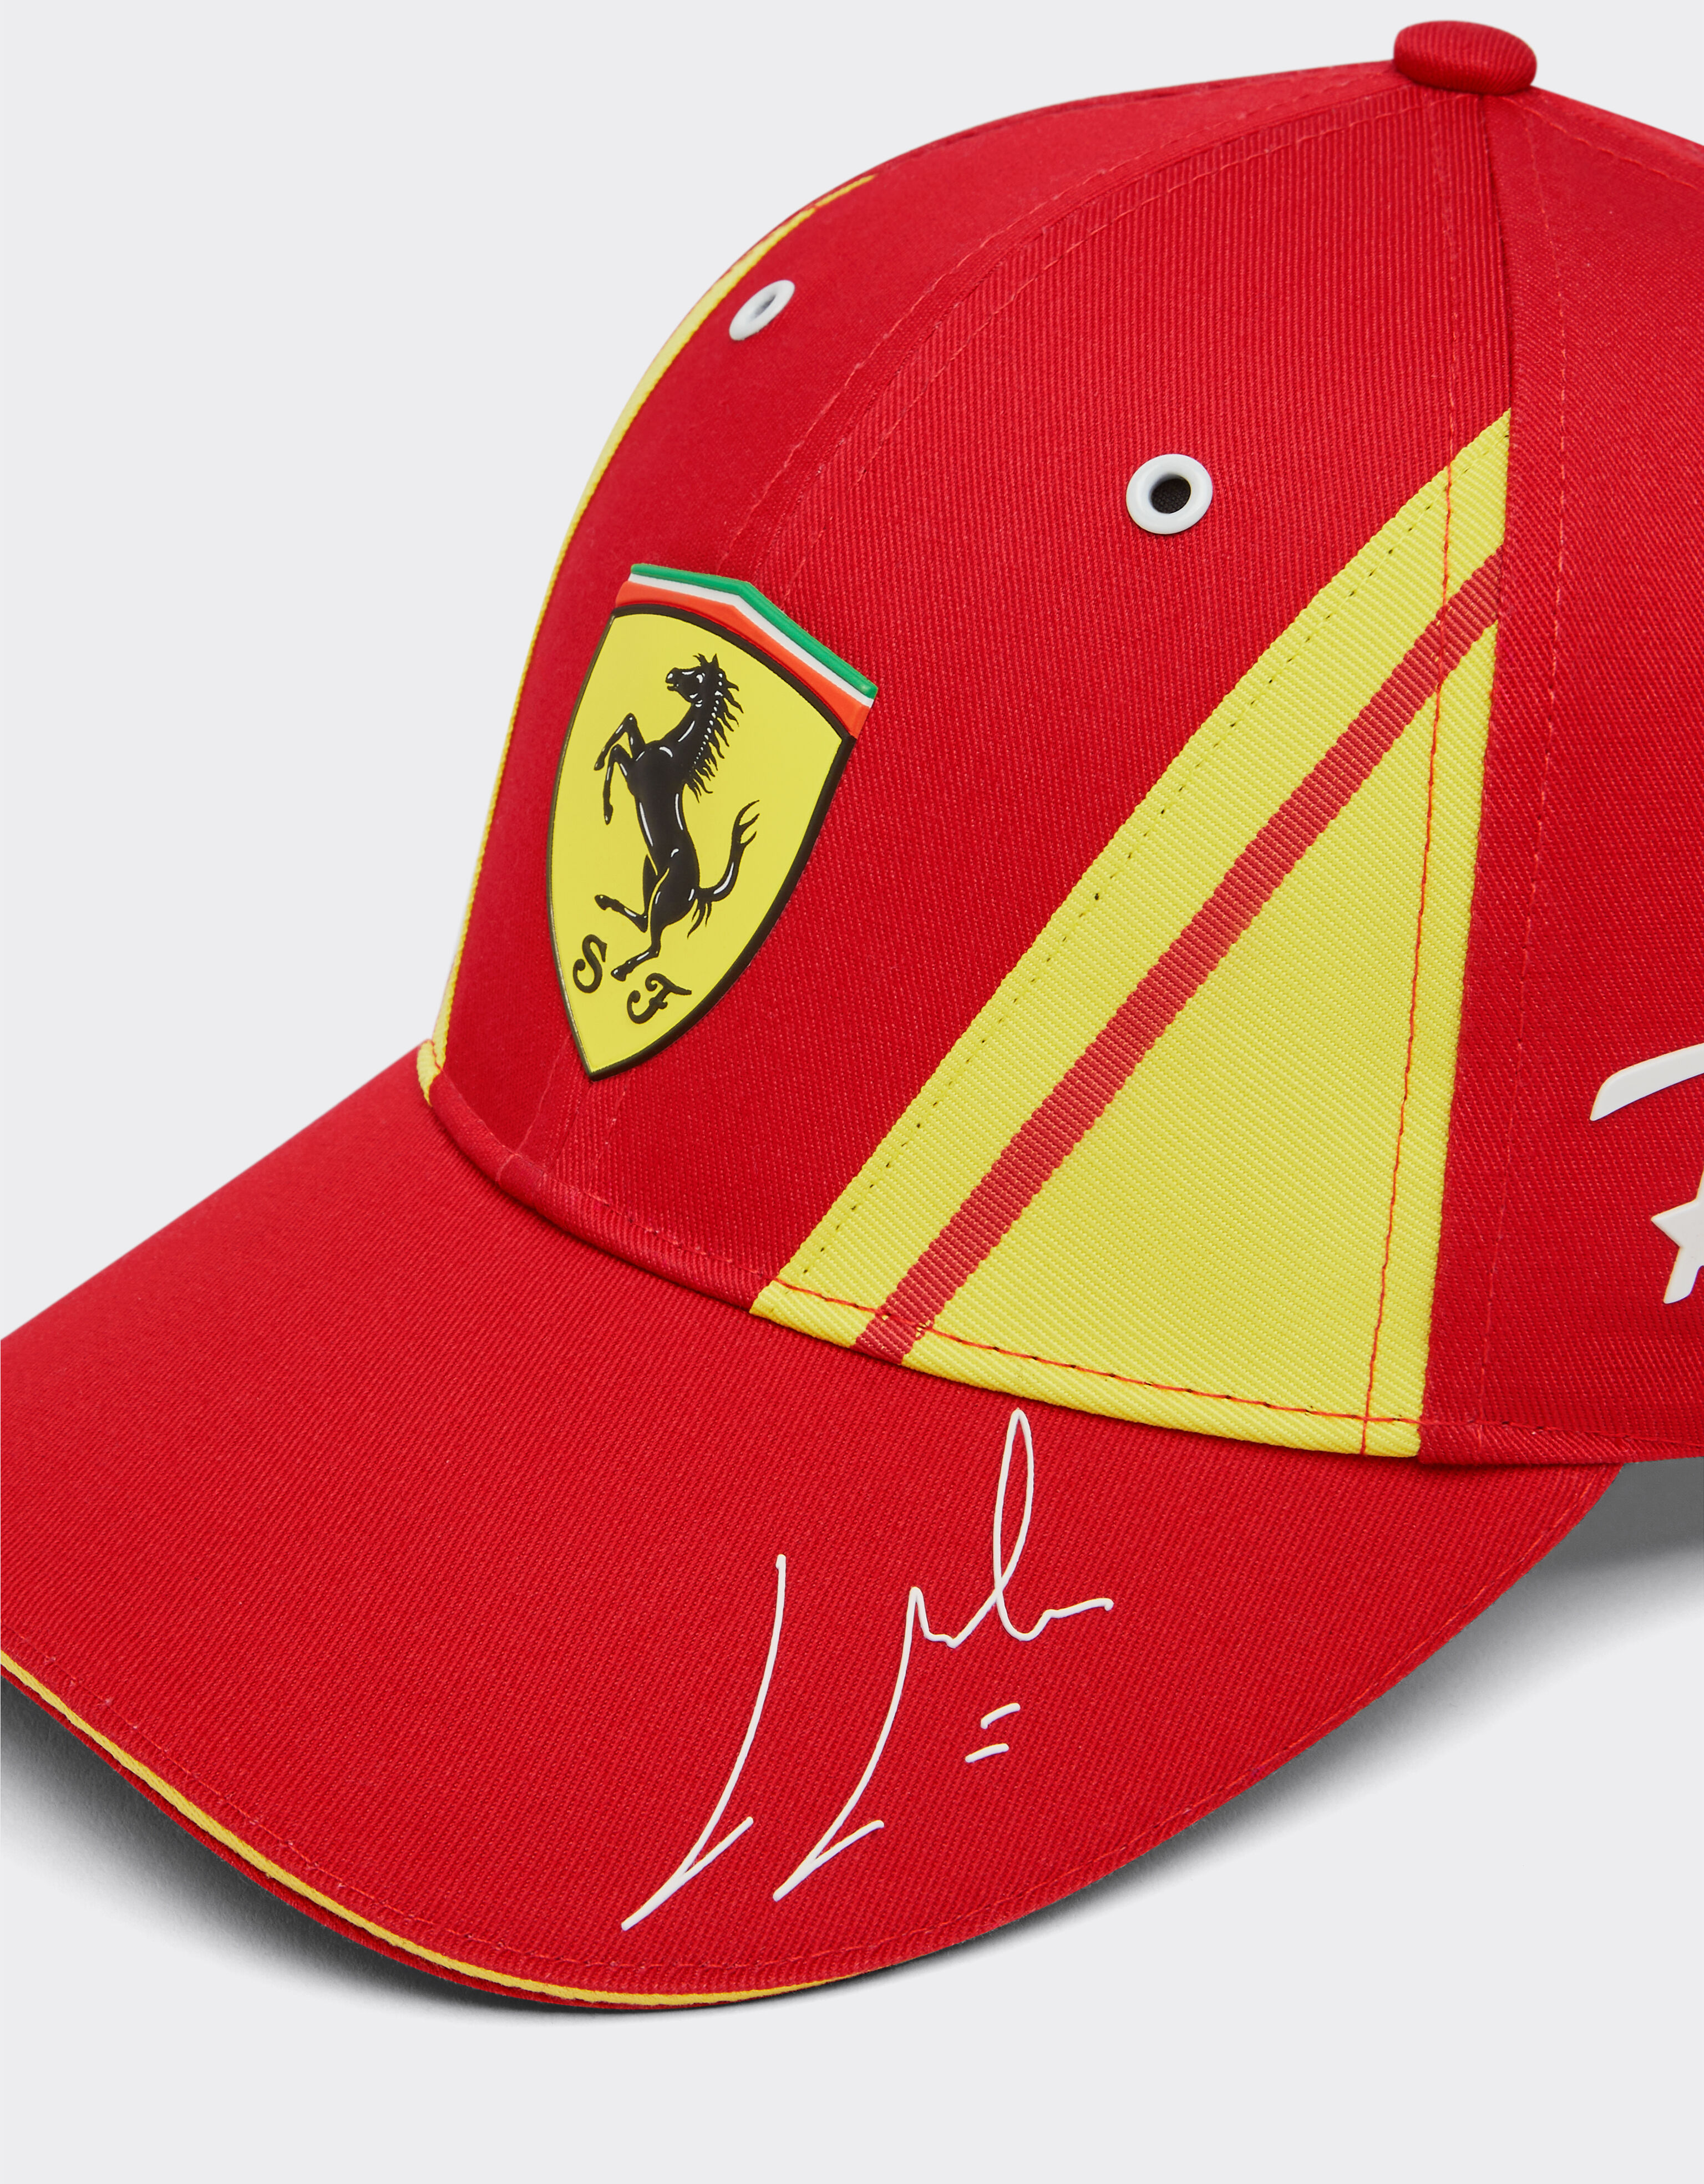 Ferrari Ferrari Hypercar ハット モリーナ - リミテッドエディション レッド F1323f